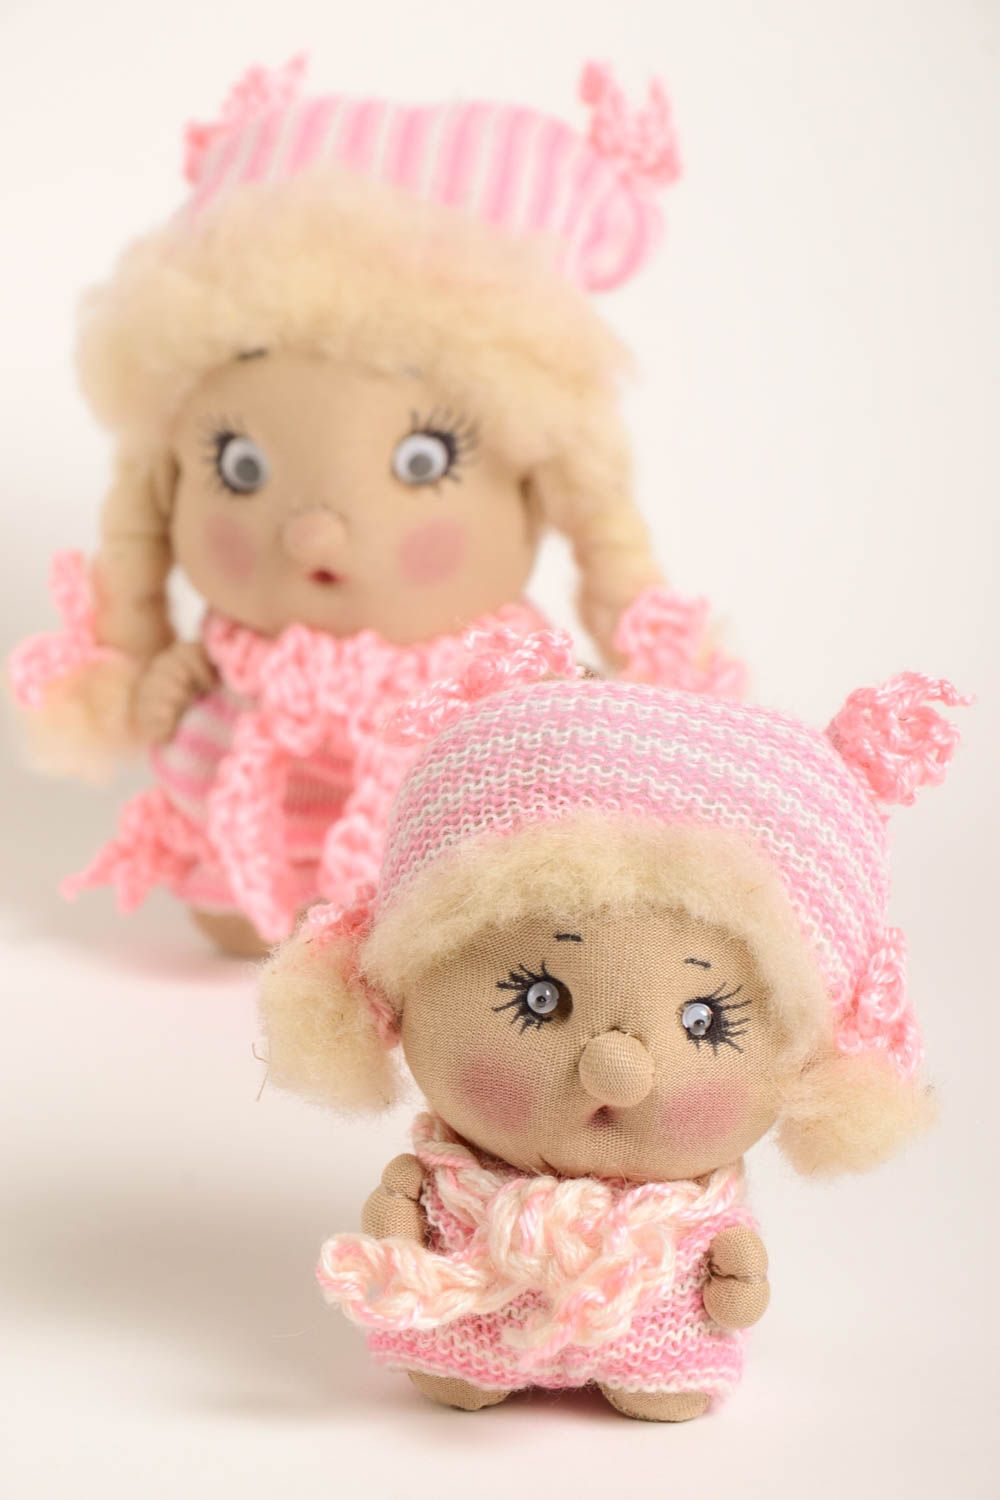 Handmade soft toys for children cute toys nursery decor ideas gift for baby photo 3